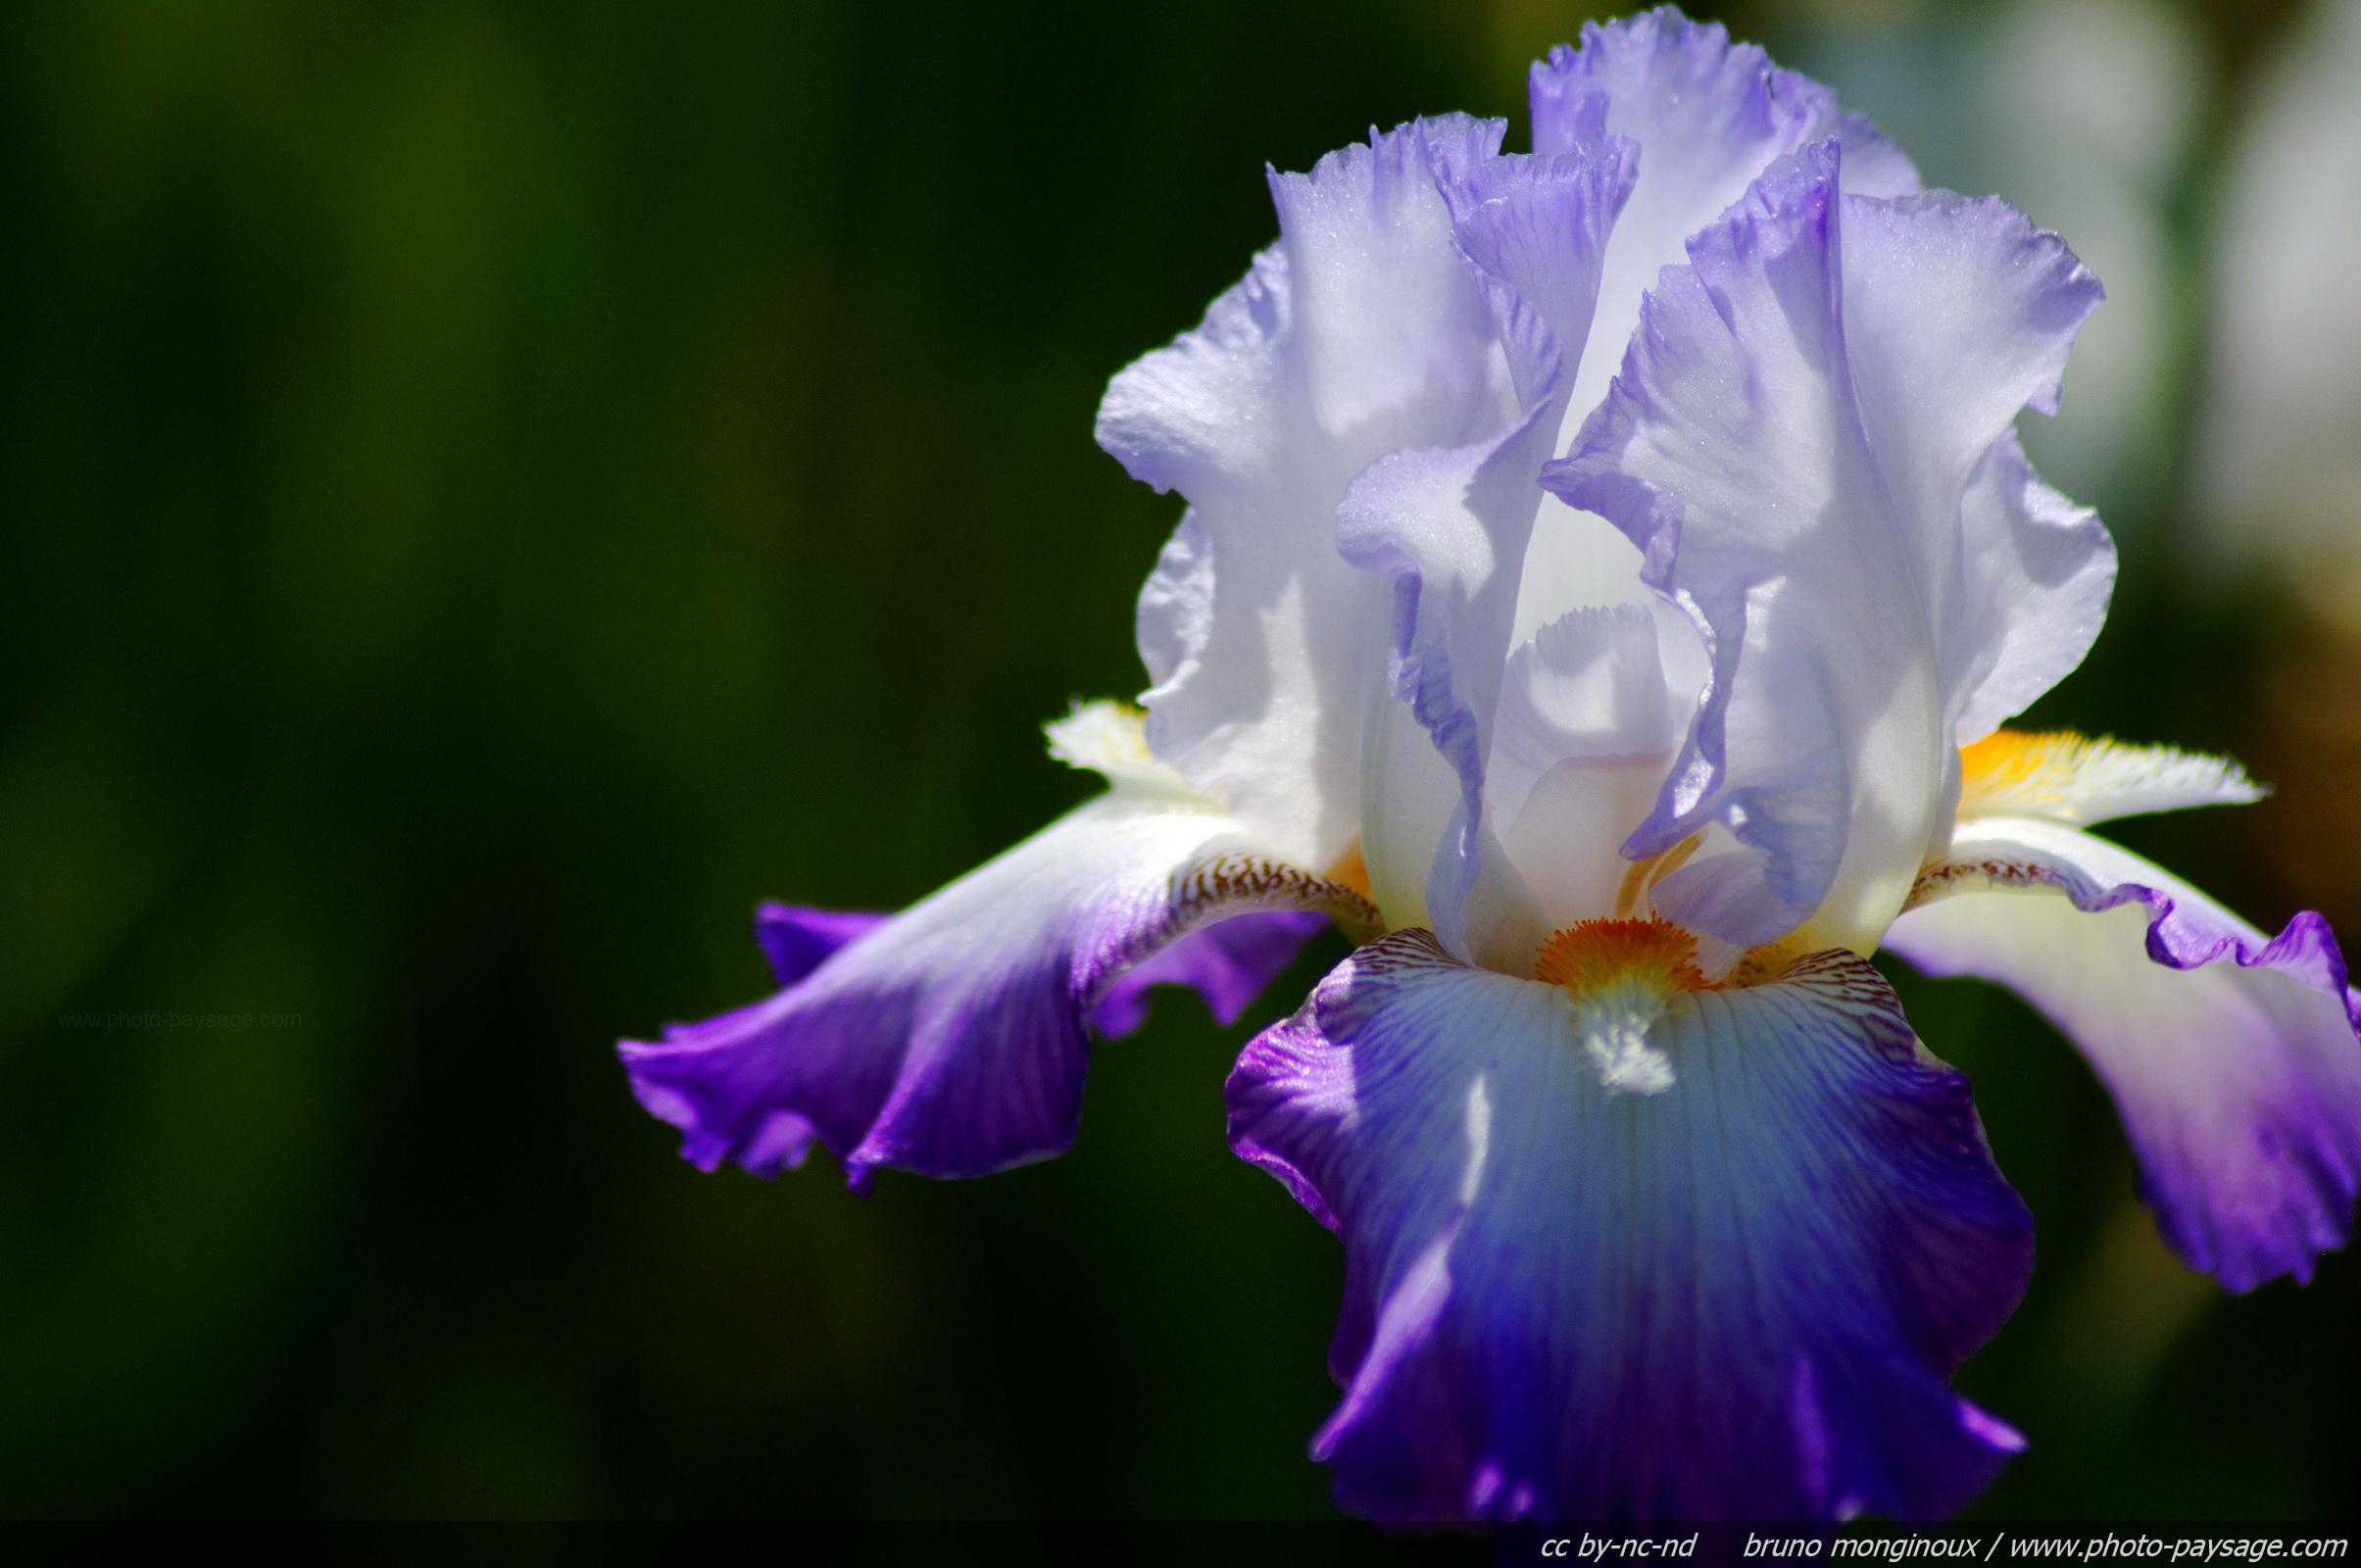 Iris - Iris mauve et blanc - Photo-Paysage.com Photo-Paysage.com